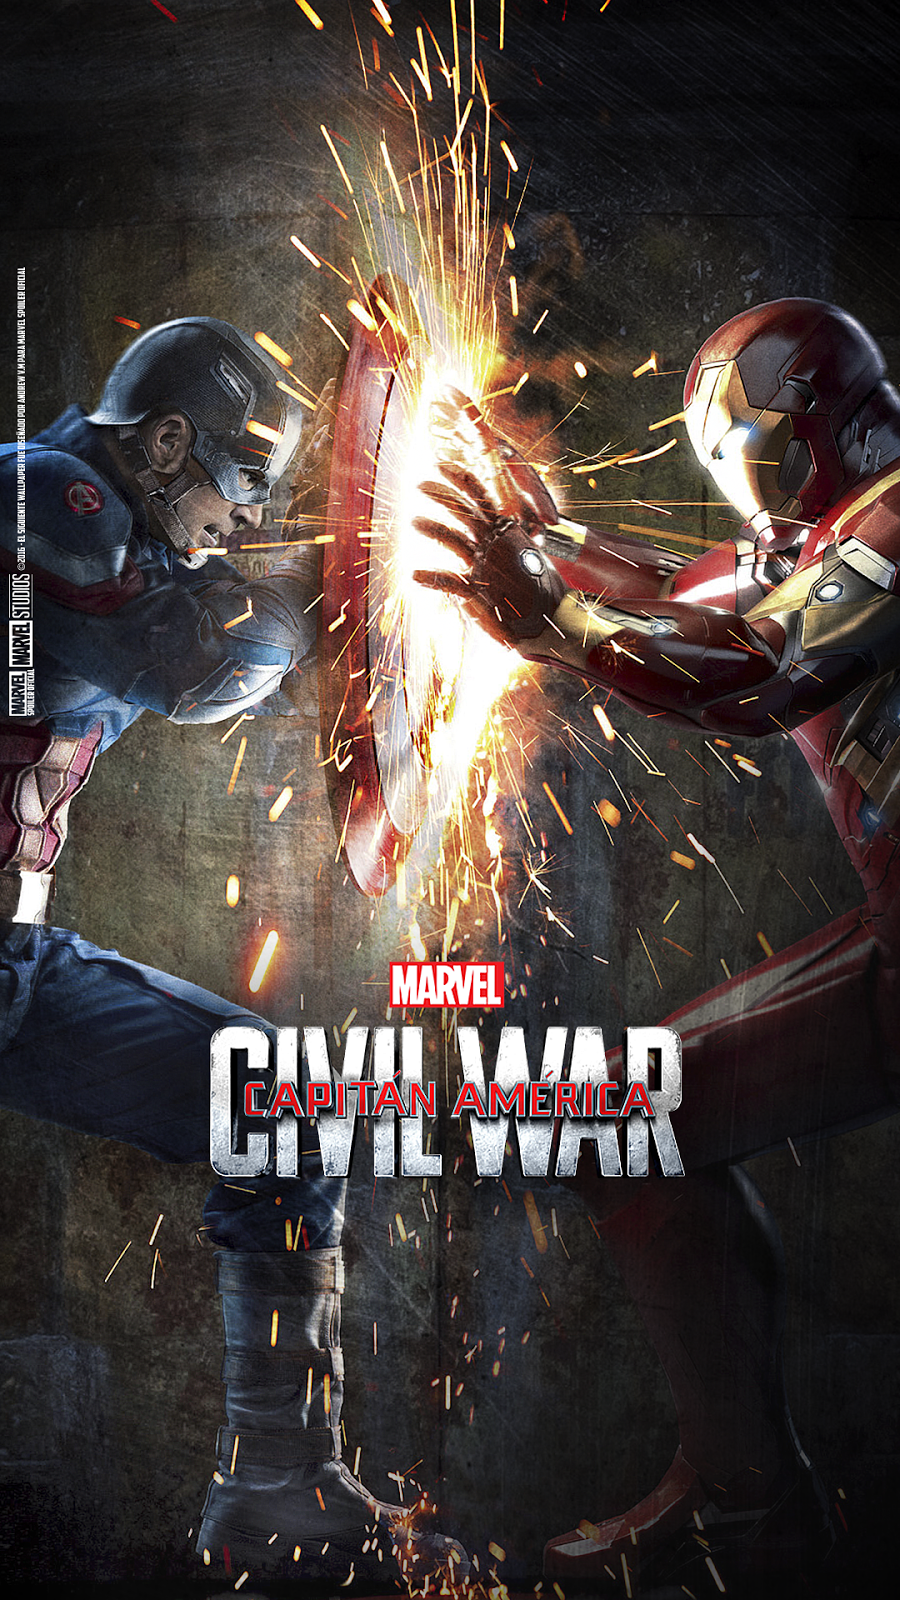 Iron Man With Captain America Shield - HD Wallpaper 